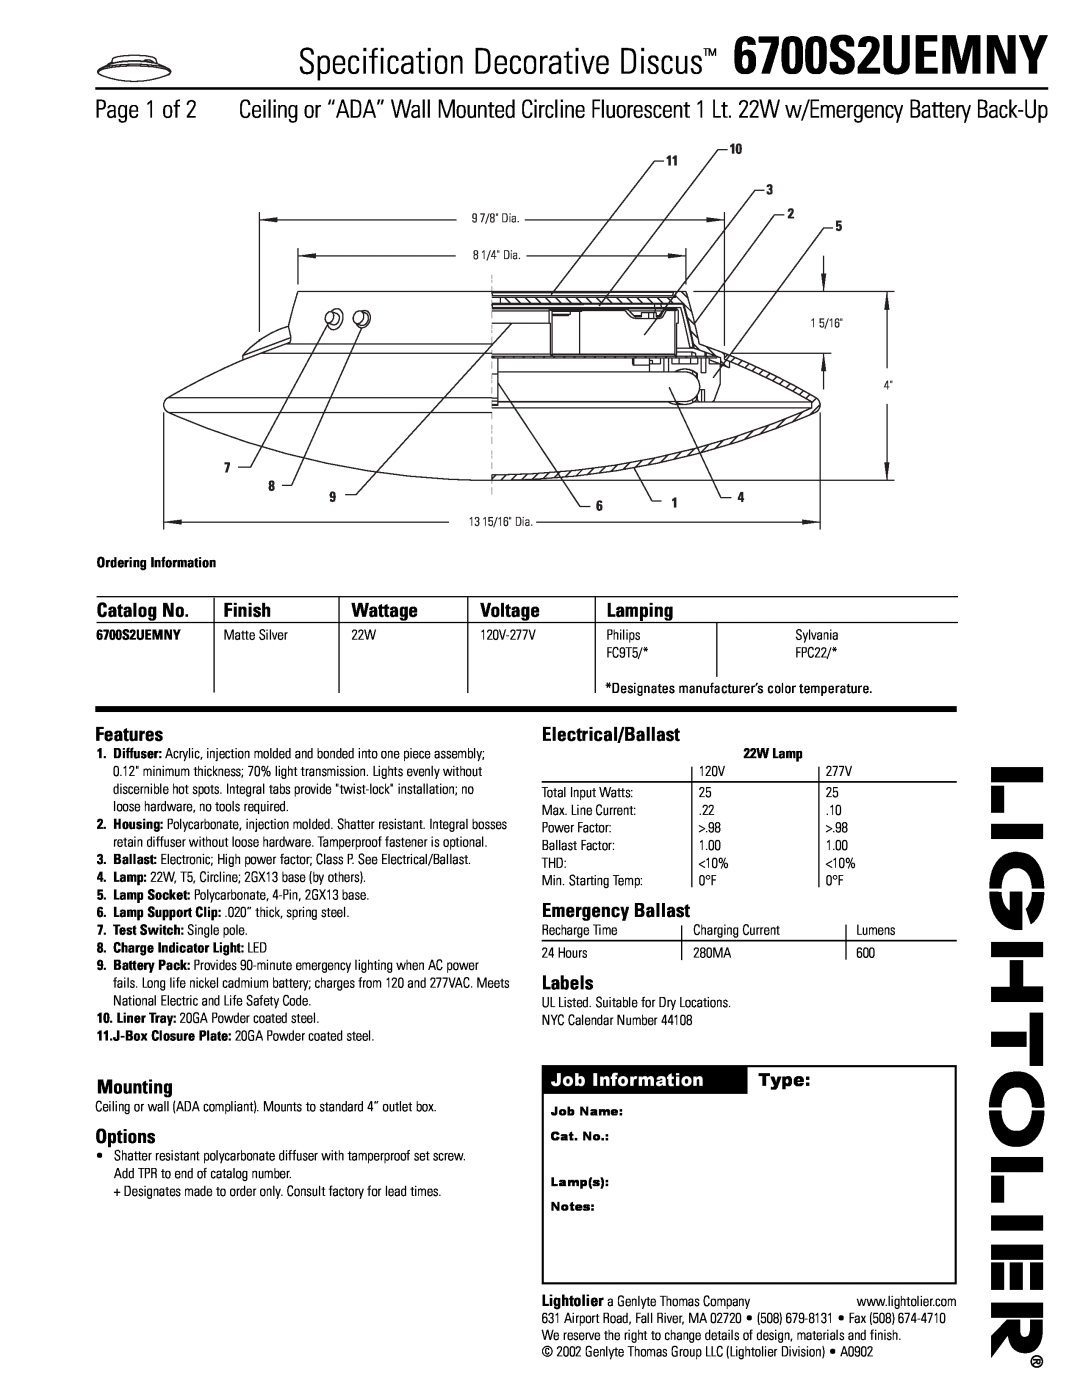 Lightolier manual Specification Decorative Discus 6700S2UEMNY 